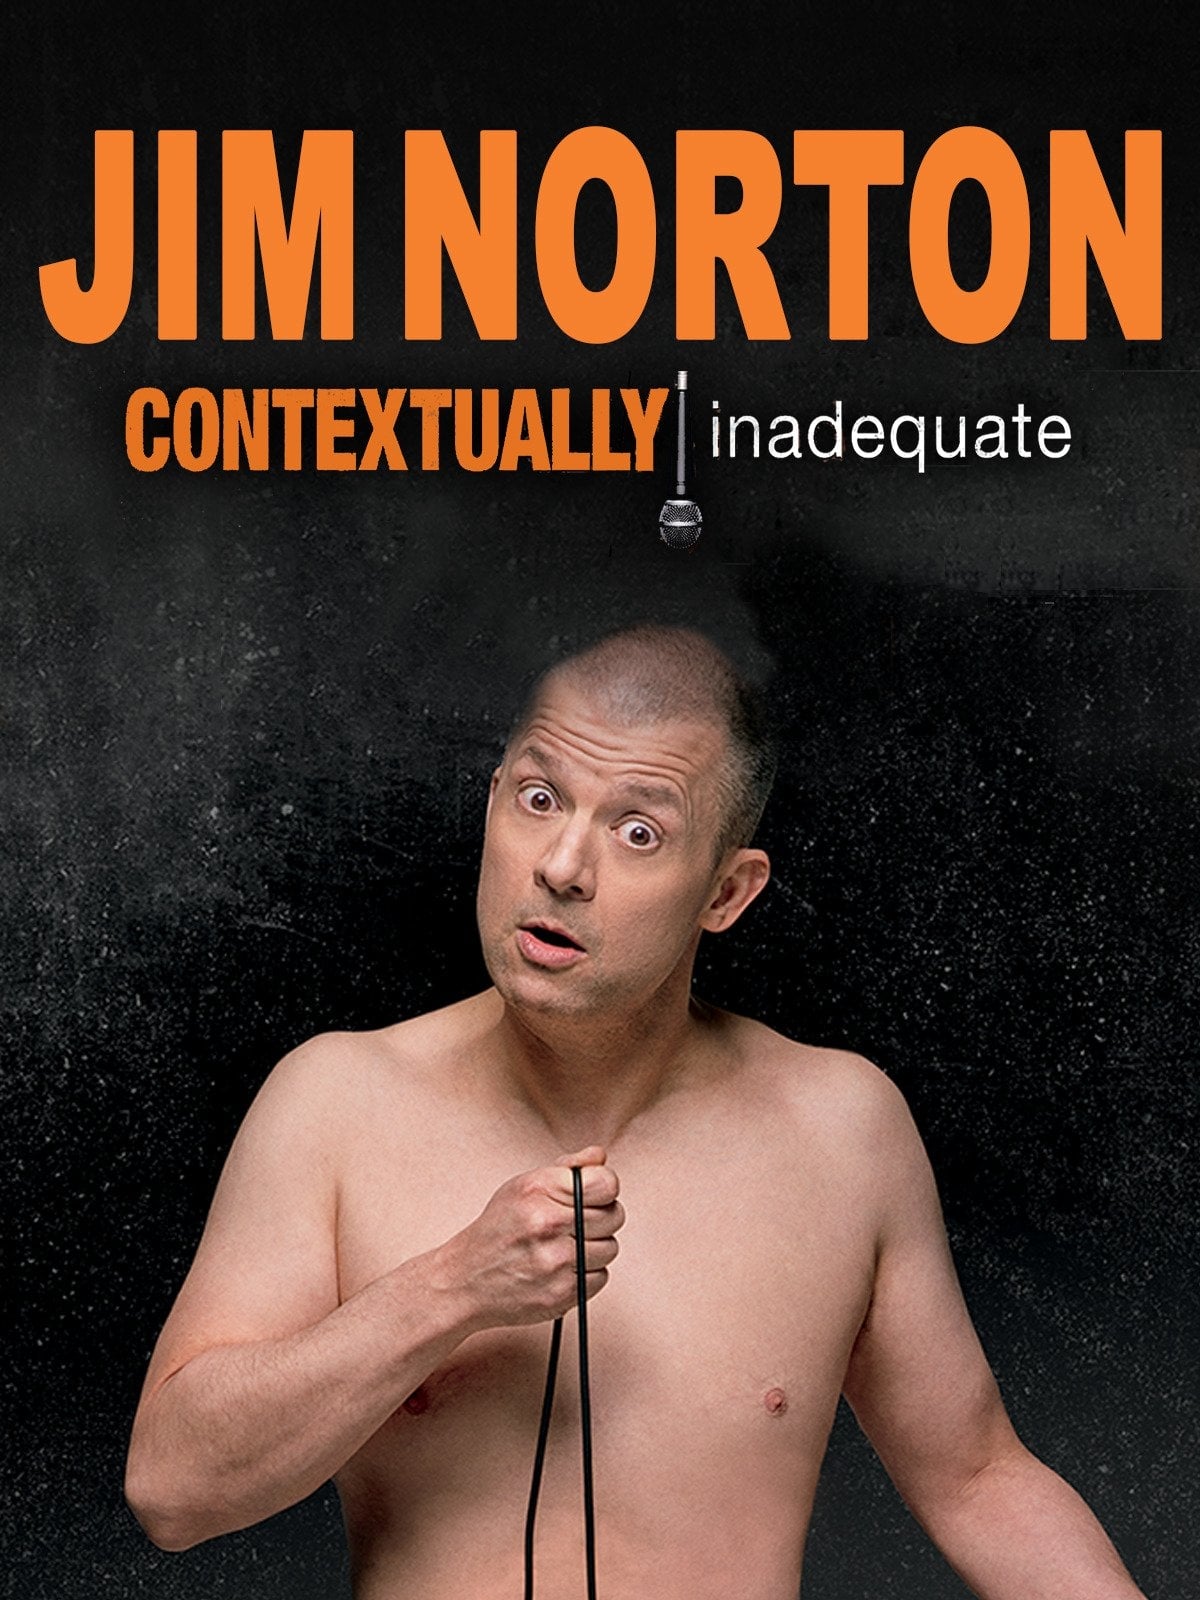 Jim Norton: Contextually Inadequate (2015)